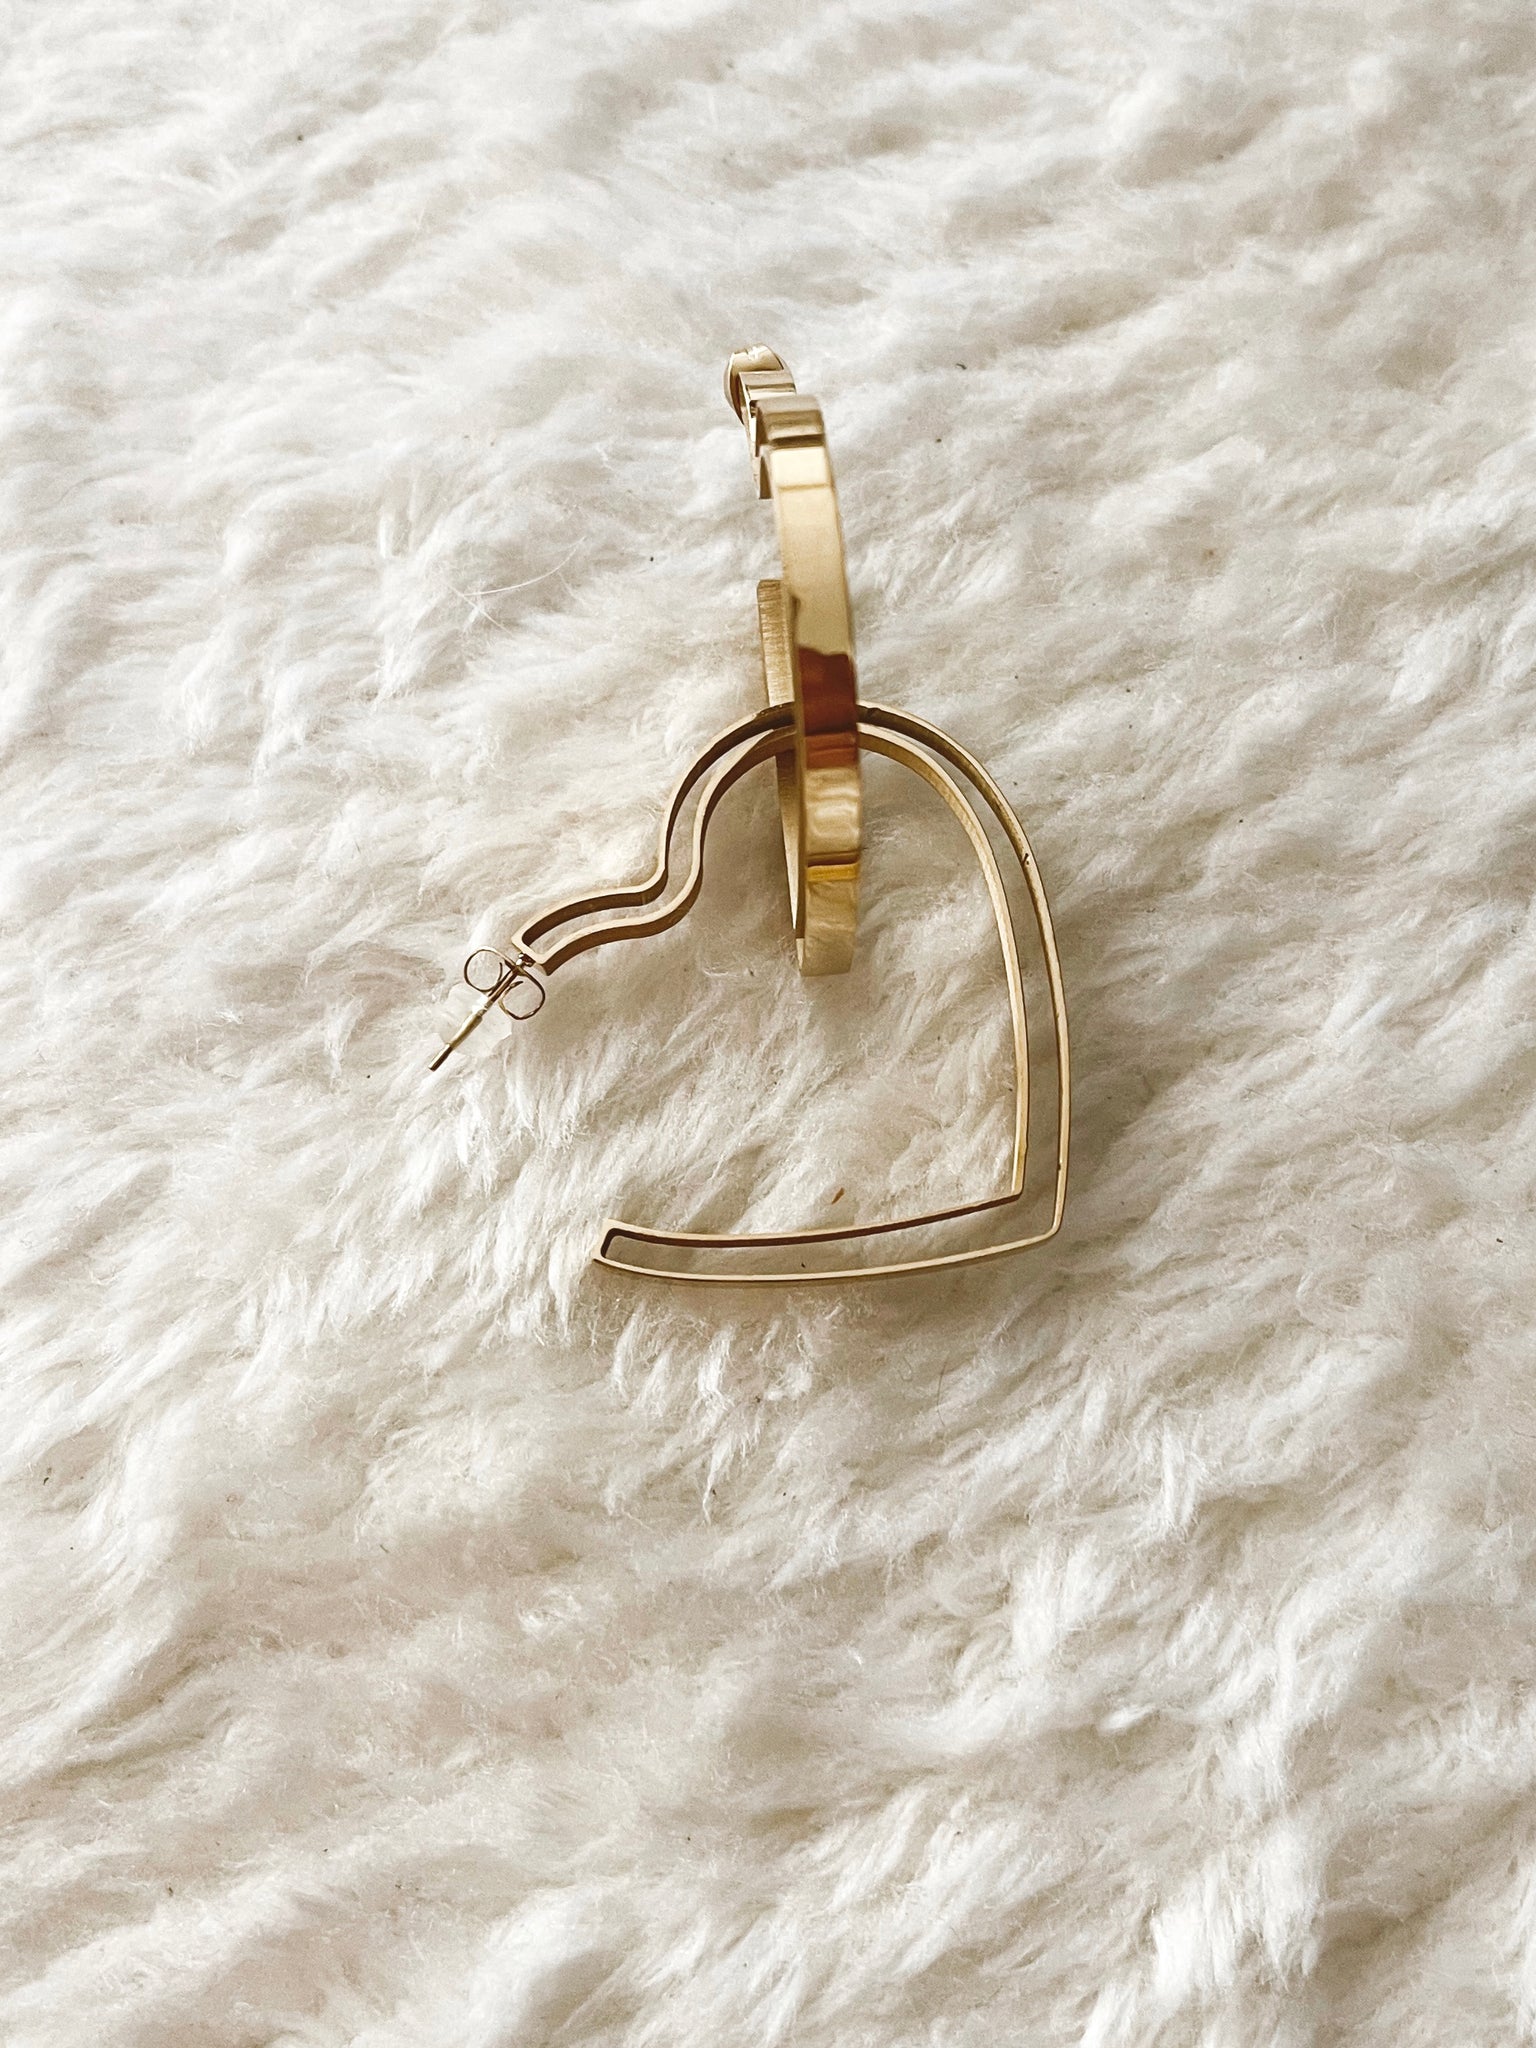 Large Heart Earrings in Gold - Stainless Steel